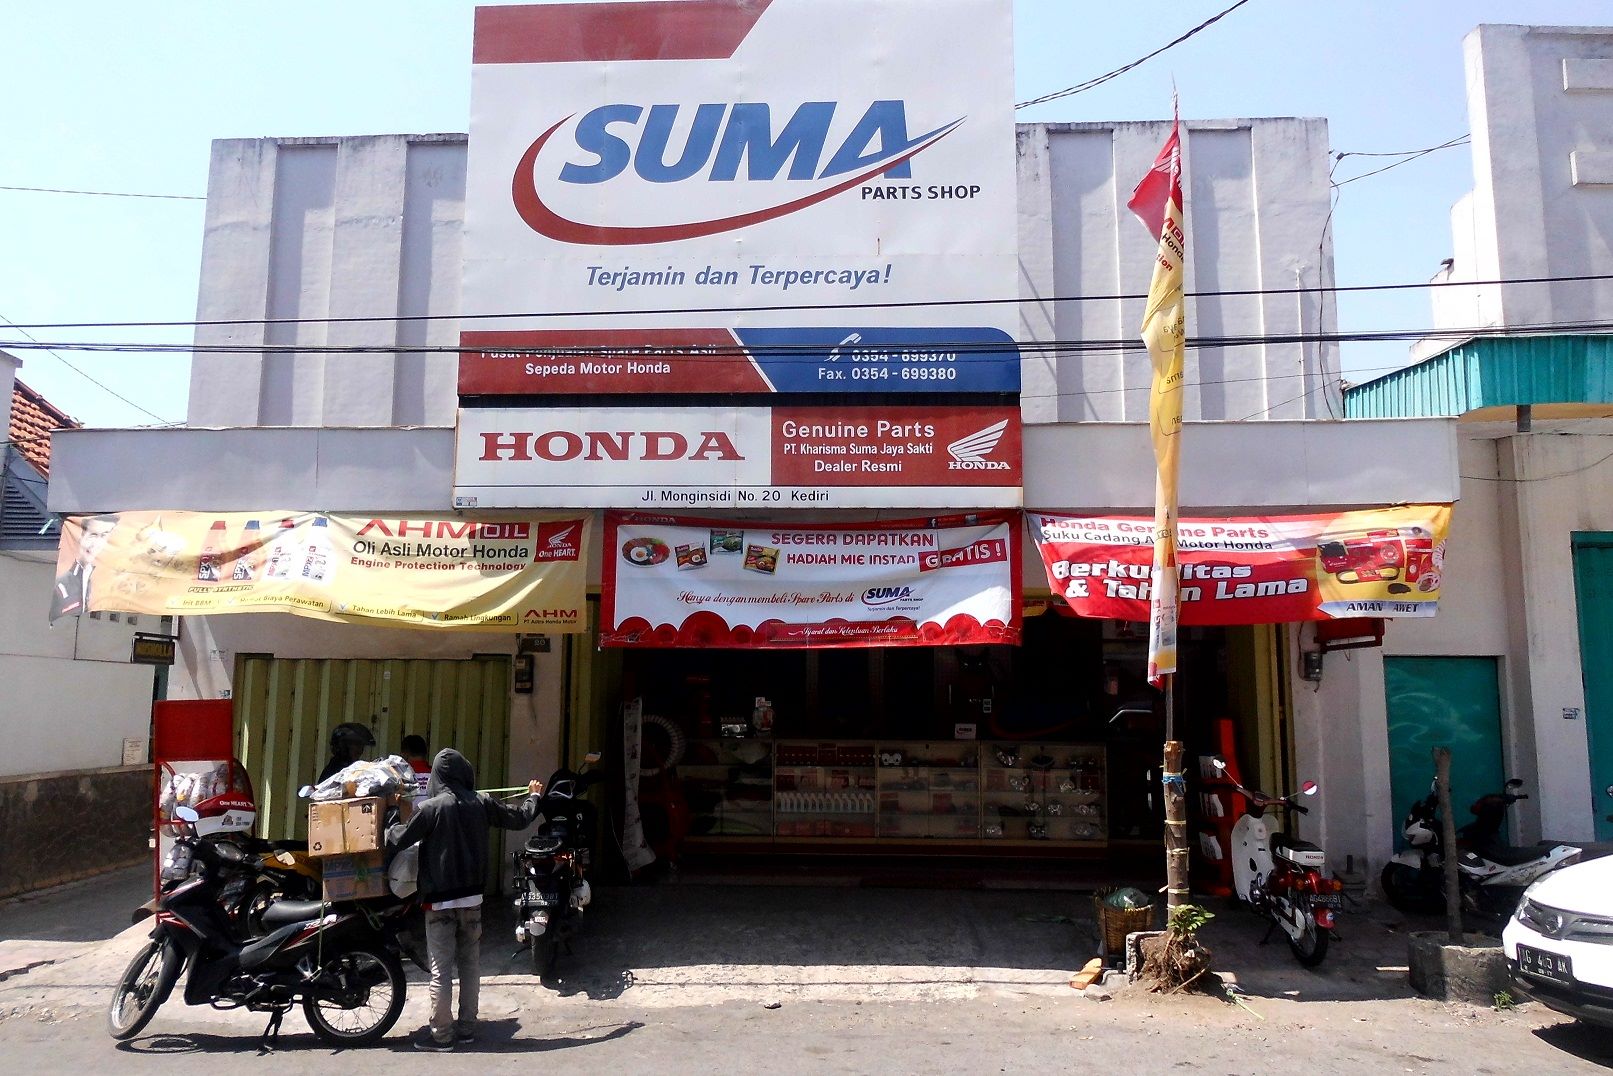 Suma Parts Shop Kediri.jpg